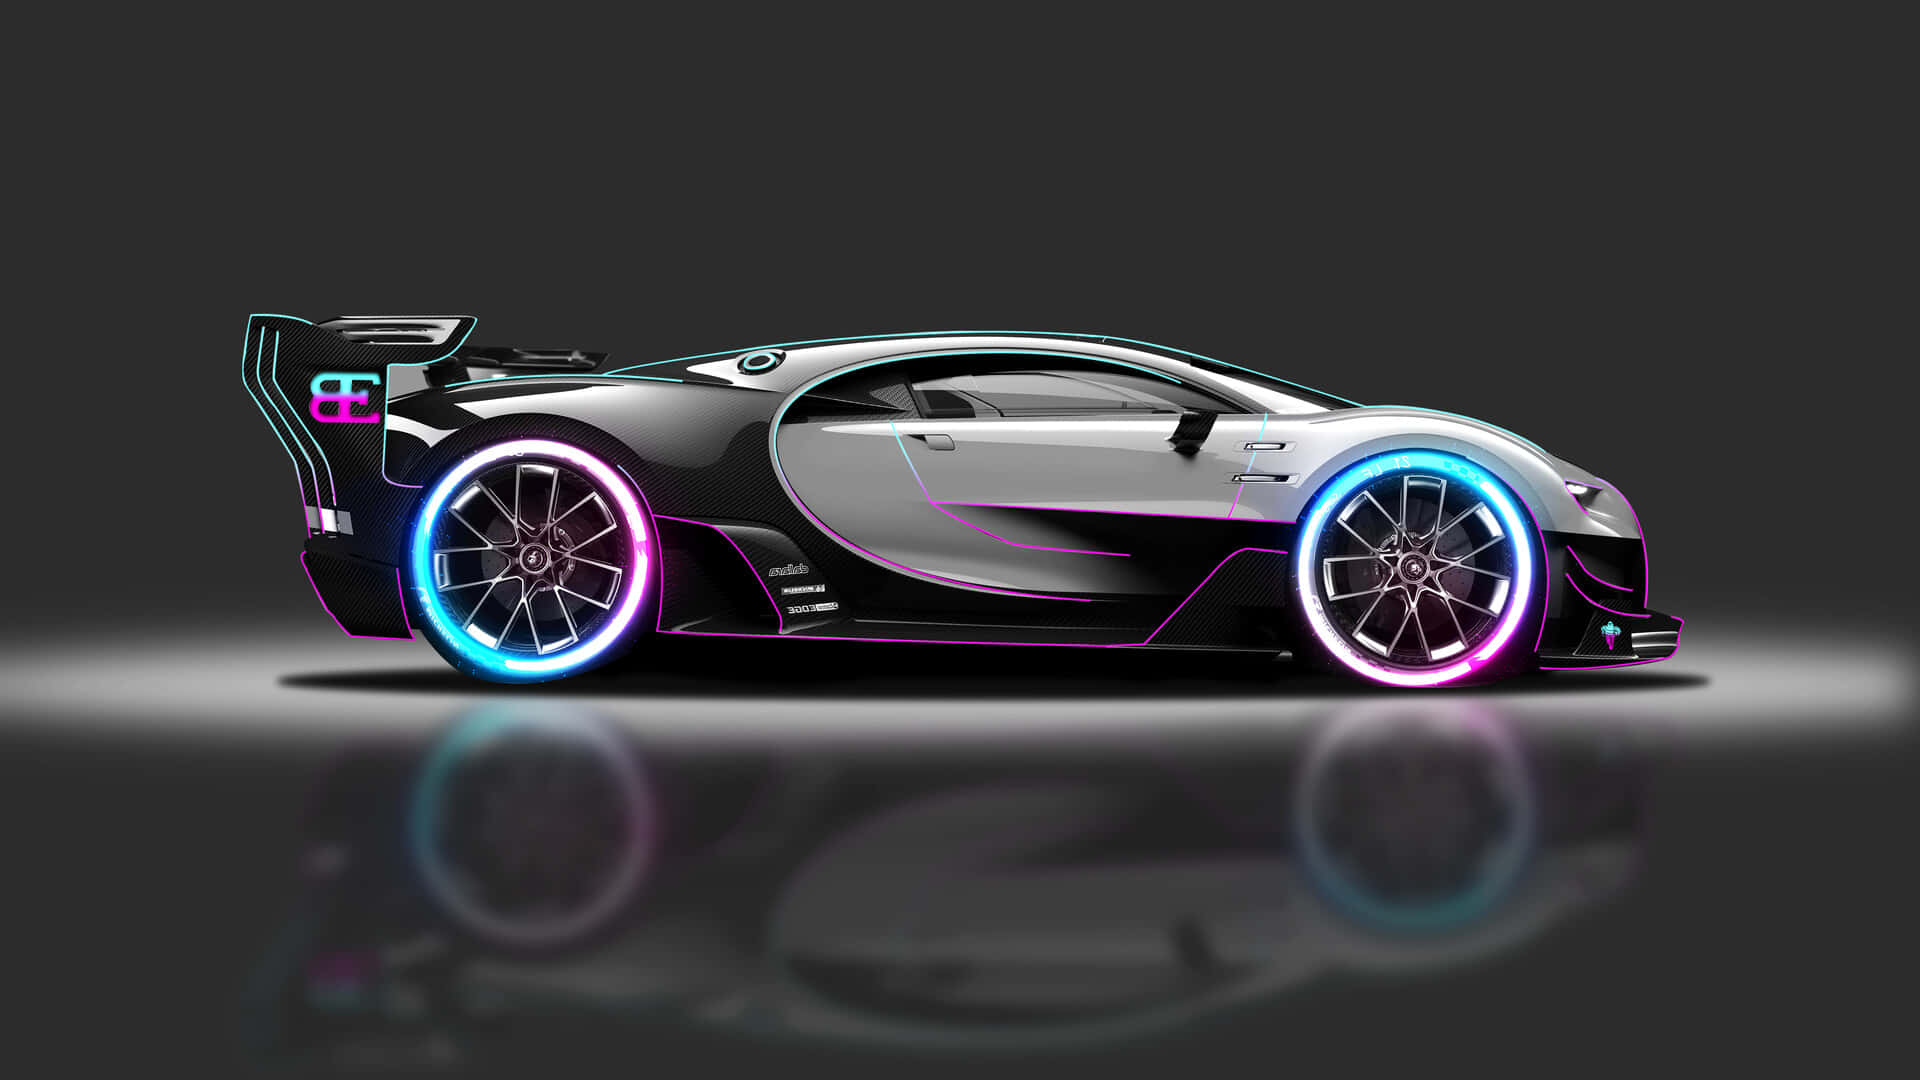 Notice the glowing colors of the Neon Bugatti. Wallpaper